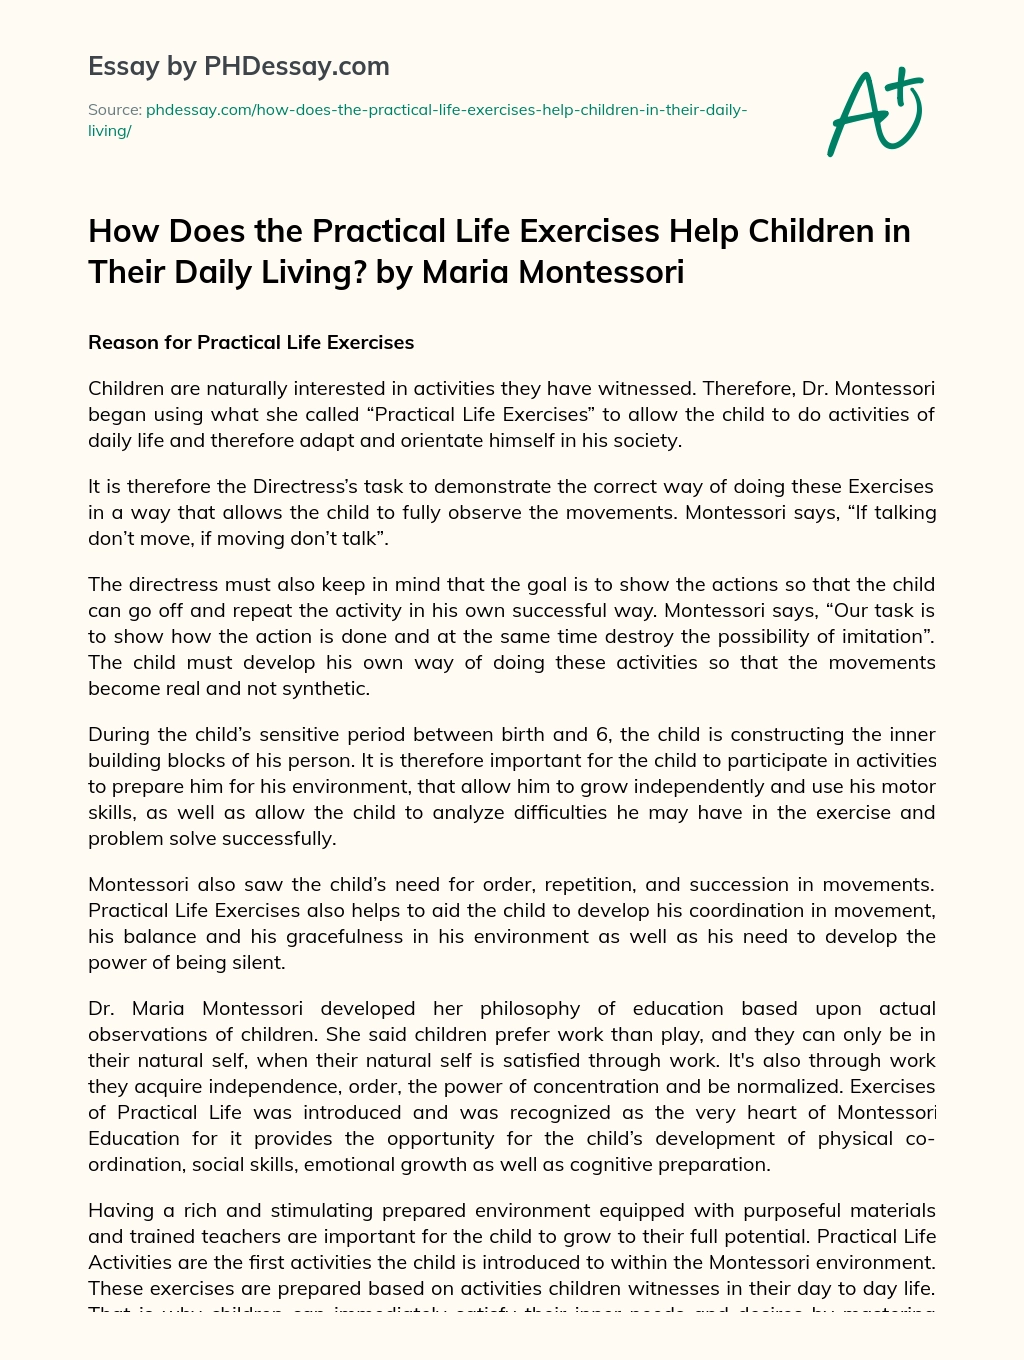 Montessori’s Practical Life Exercises for Children’s Development essay